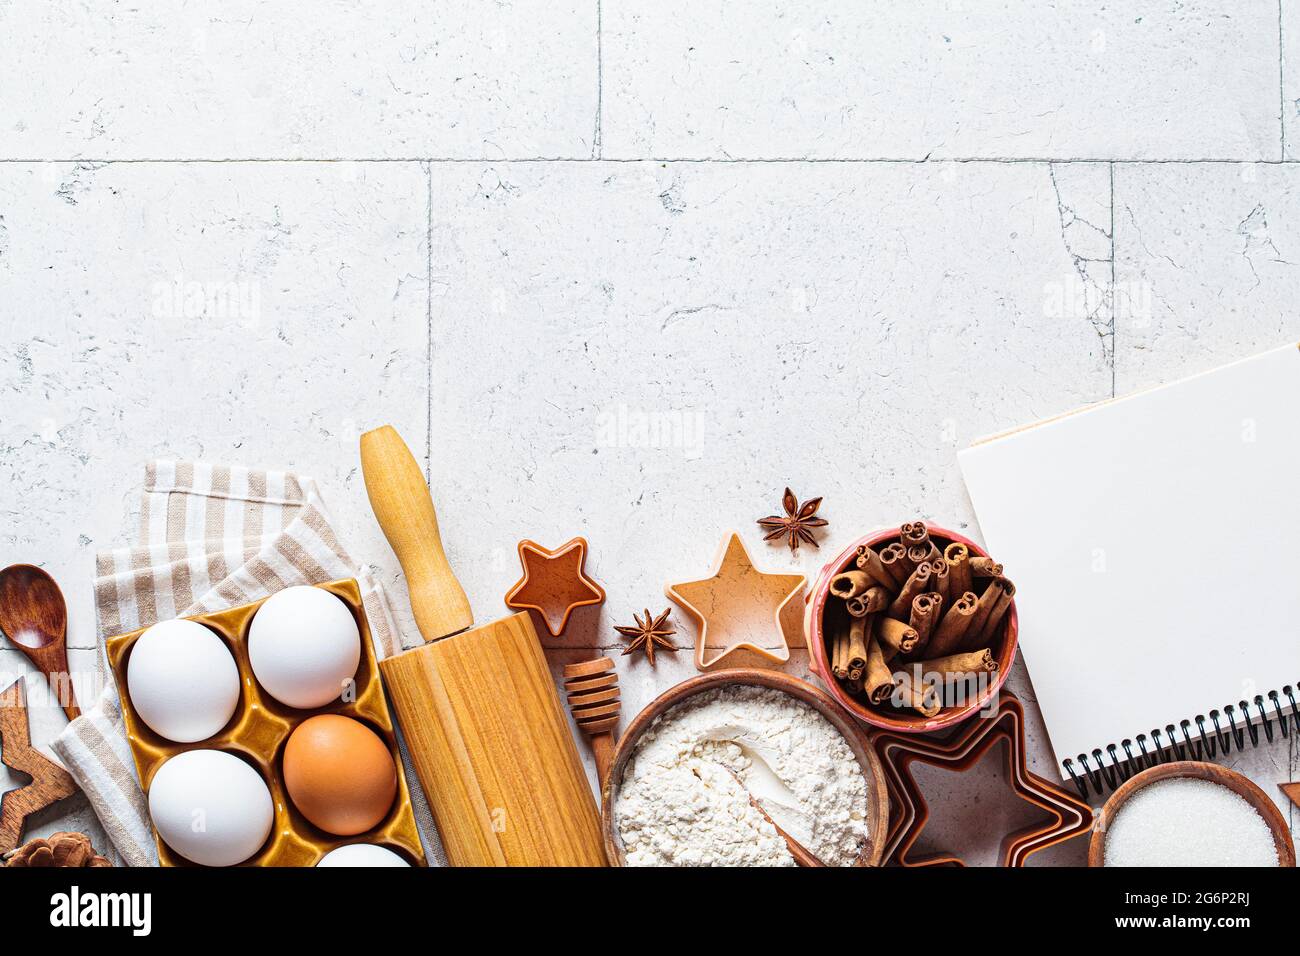 https://c8.alamy.com/comp/2G6P2RJ/christmas-cooking-concept-ingredients-for-christmas-cookies-on-gray-tiles-background-copy-space-flour-eggs-sugar-cinnamon-top-view-2G6P2RJ.jpg